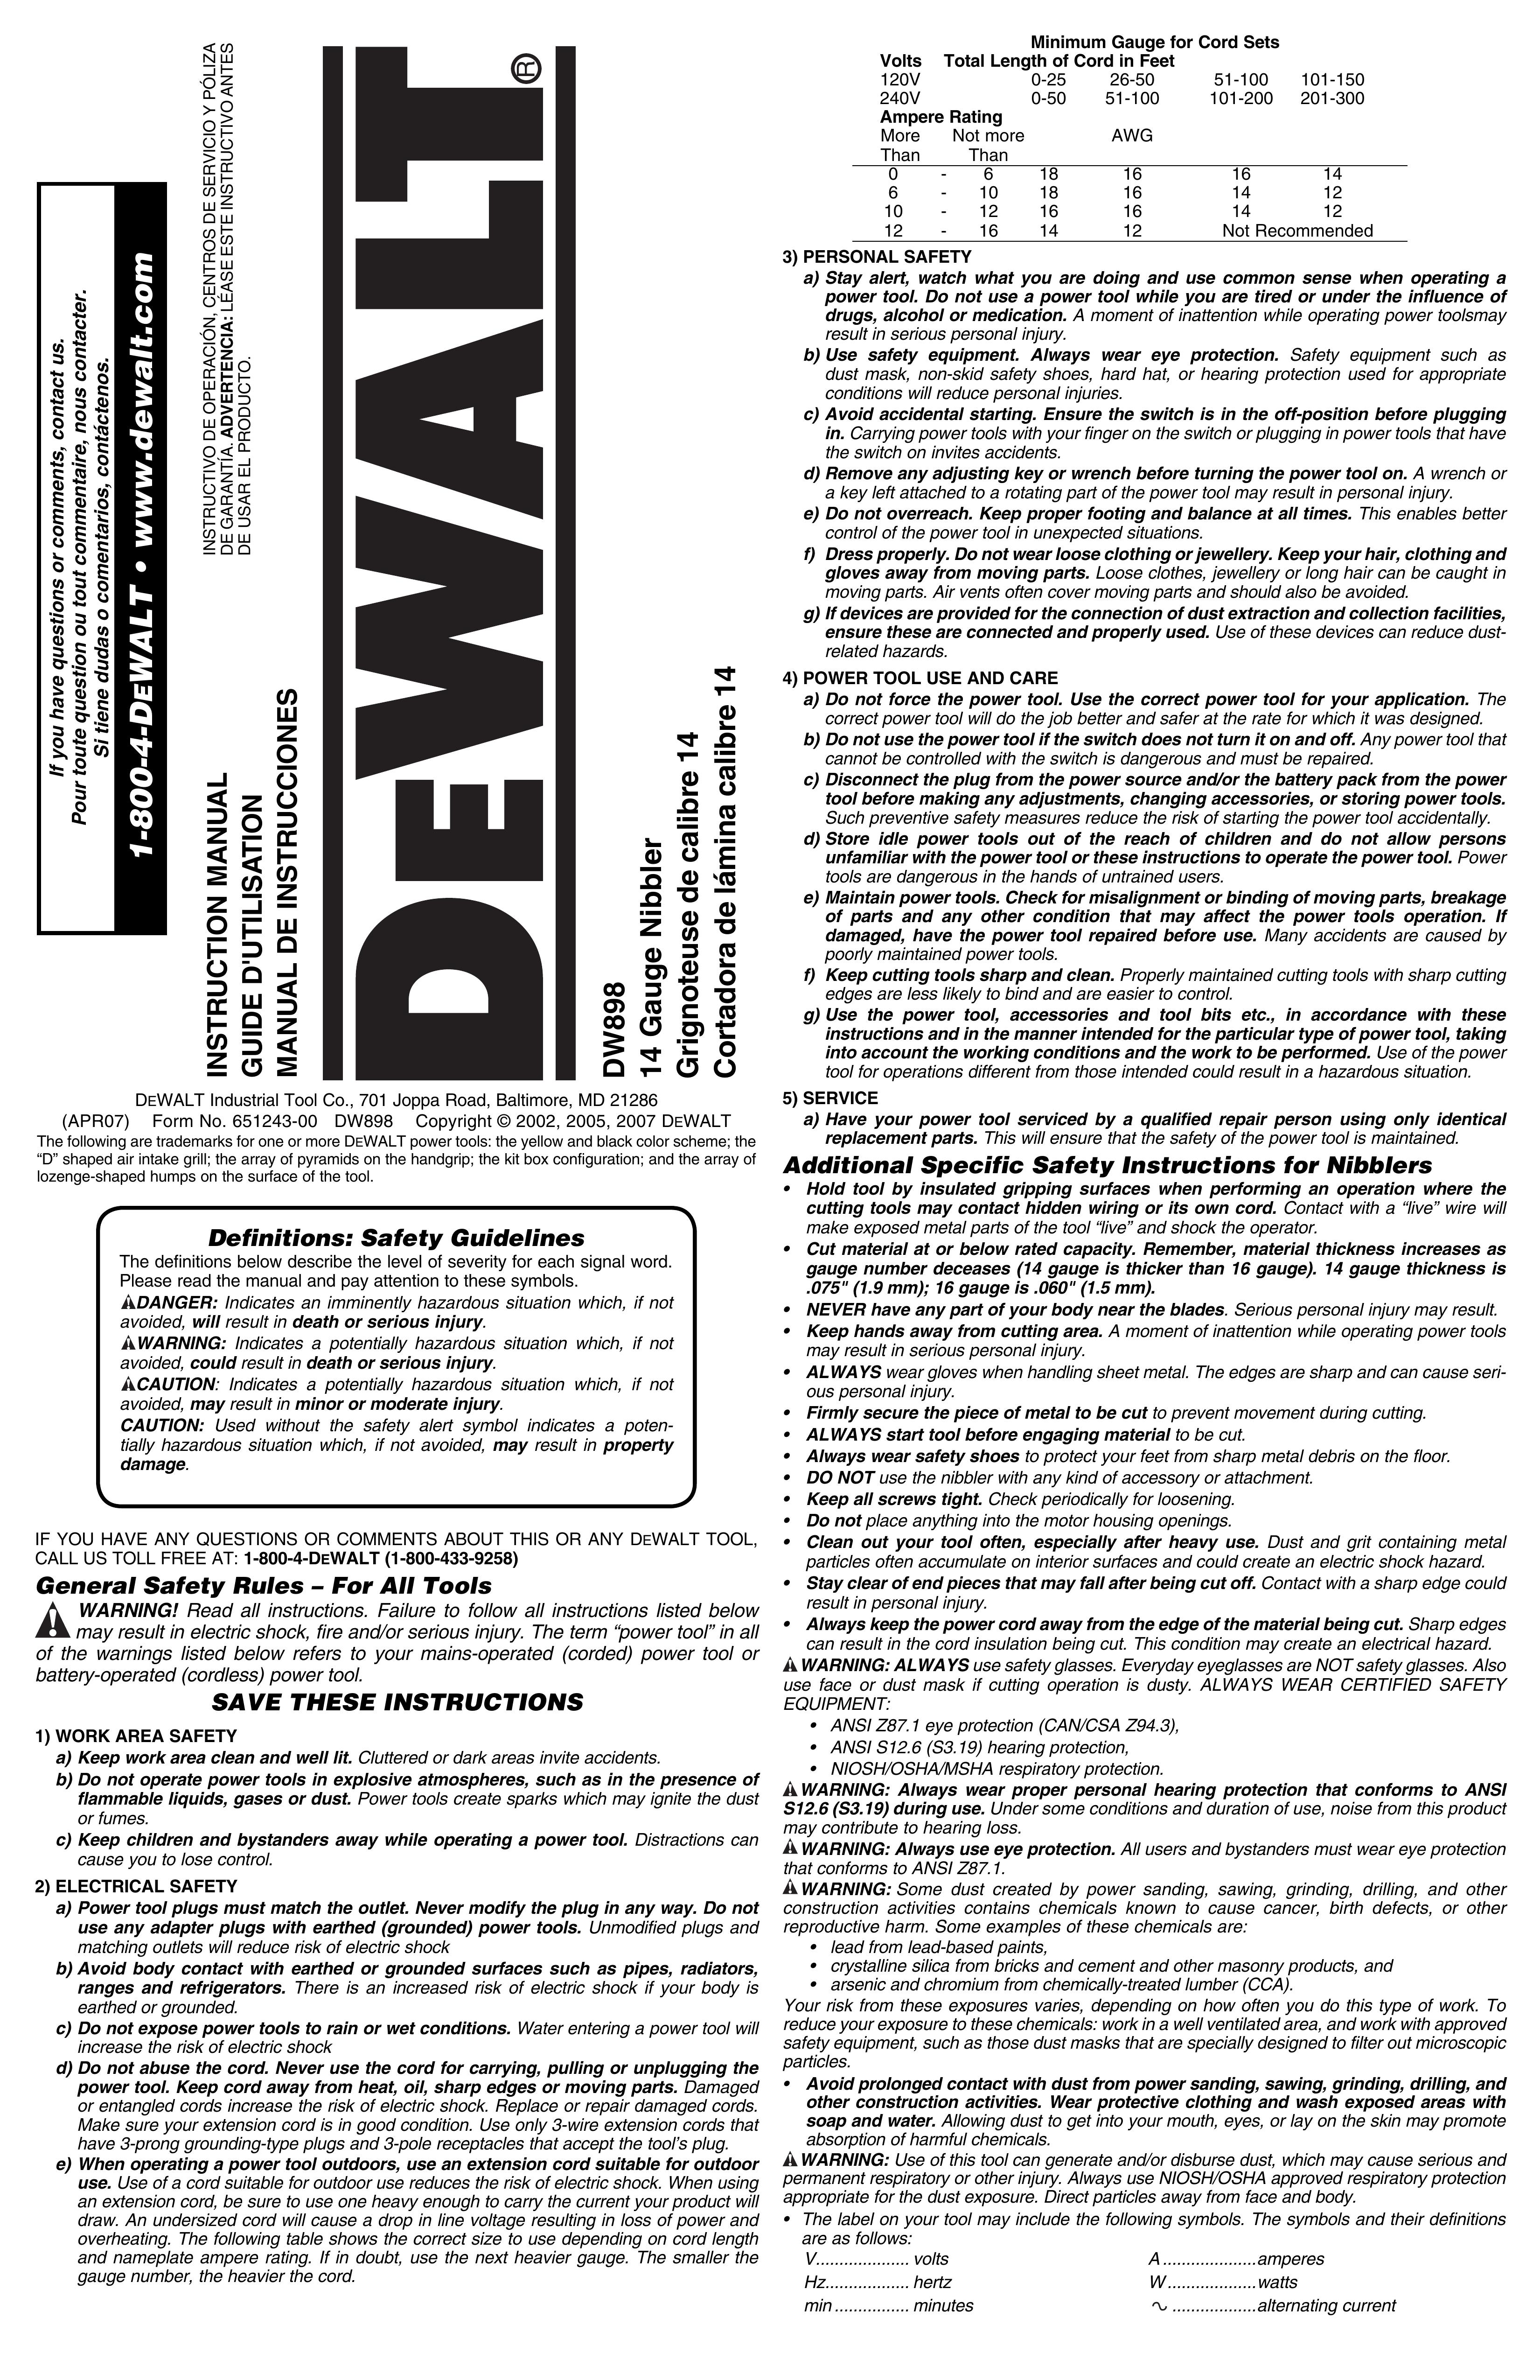 DeWalt DW898 Nebulizer User Manual